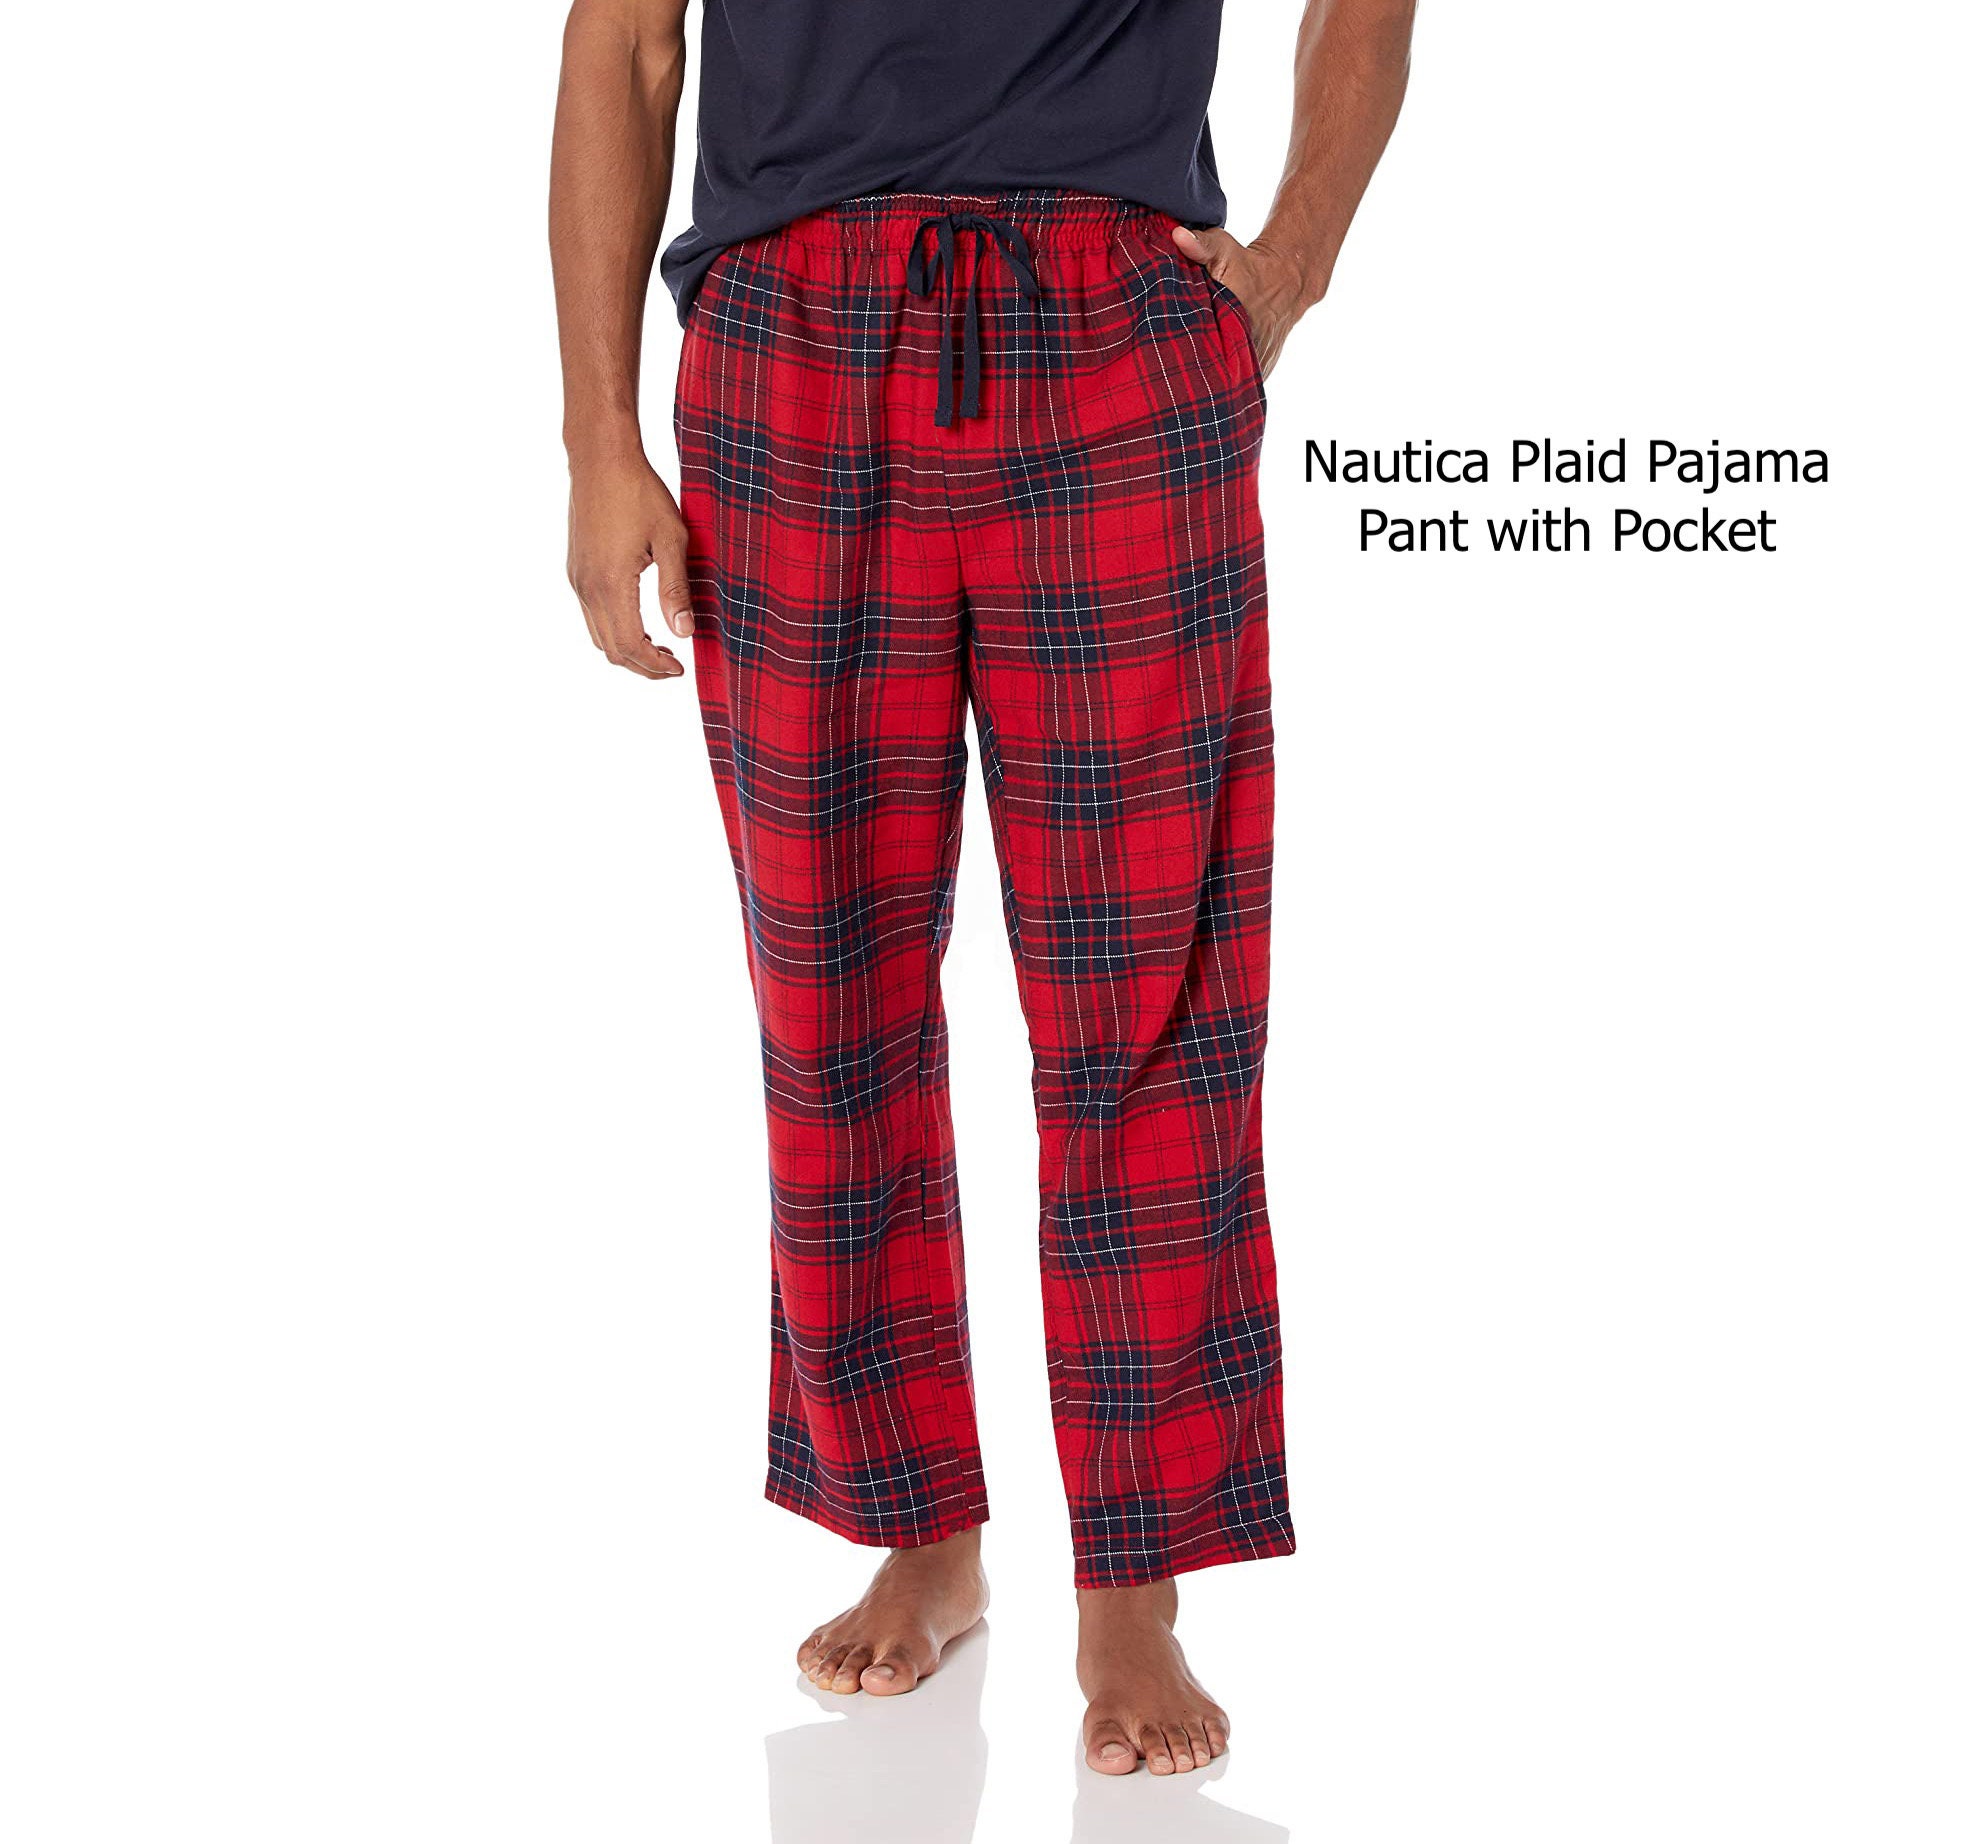 Stars Stripes Julyth Red Women's Pajama Pants Lounge Pants Soft